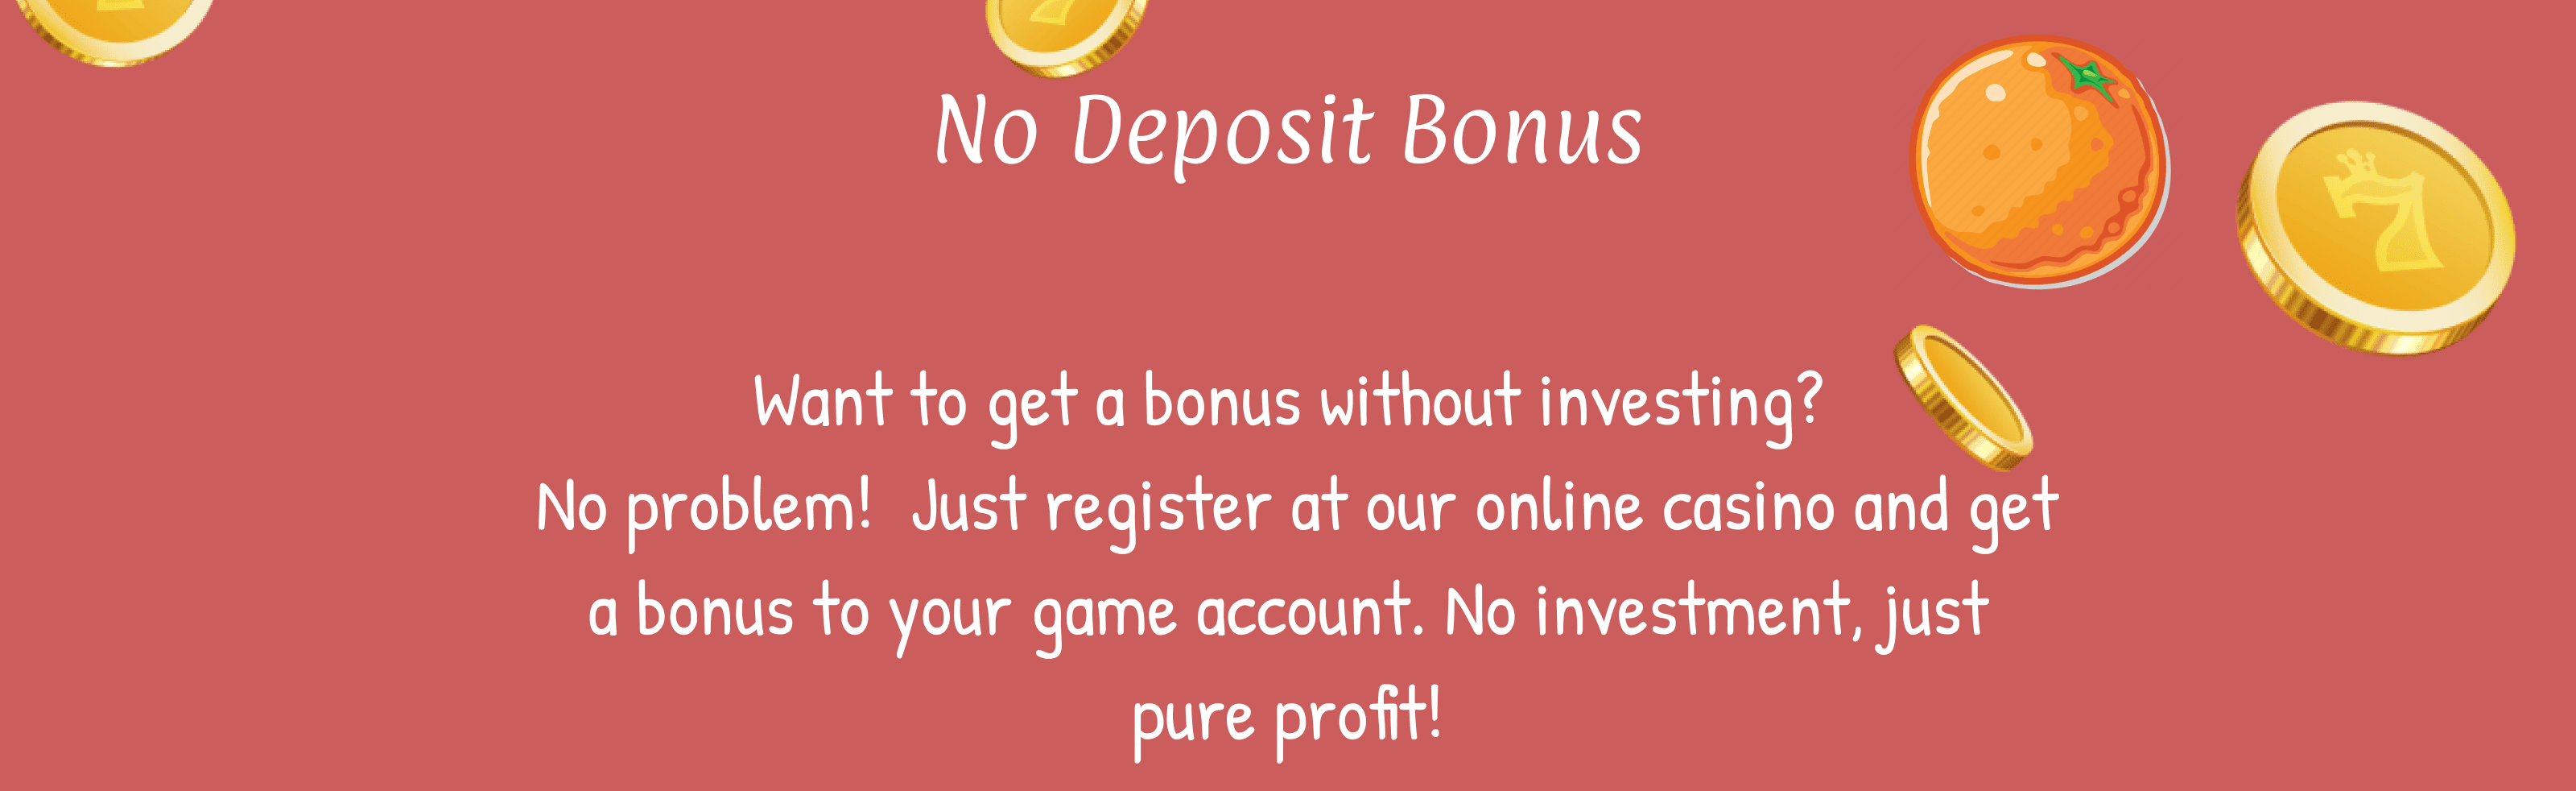 No Deposit Bonus At Hot Top Casino